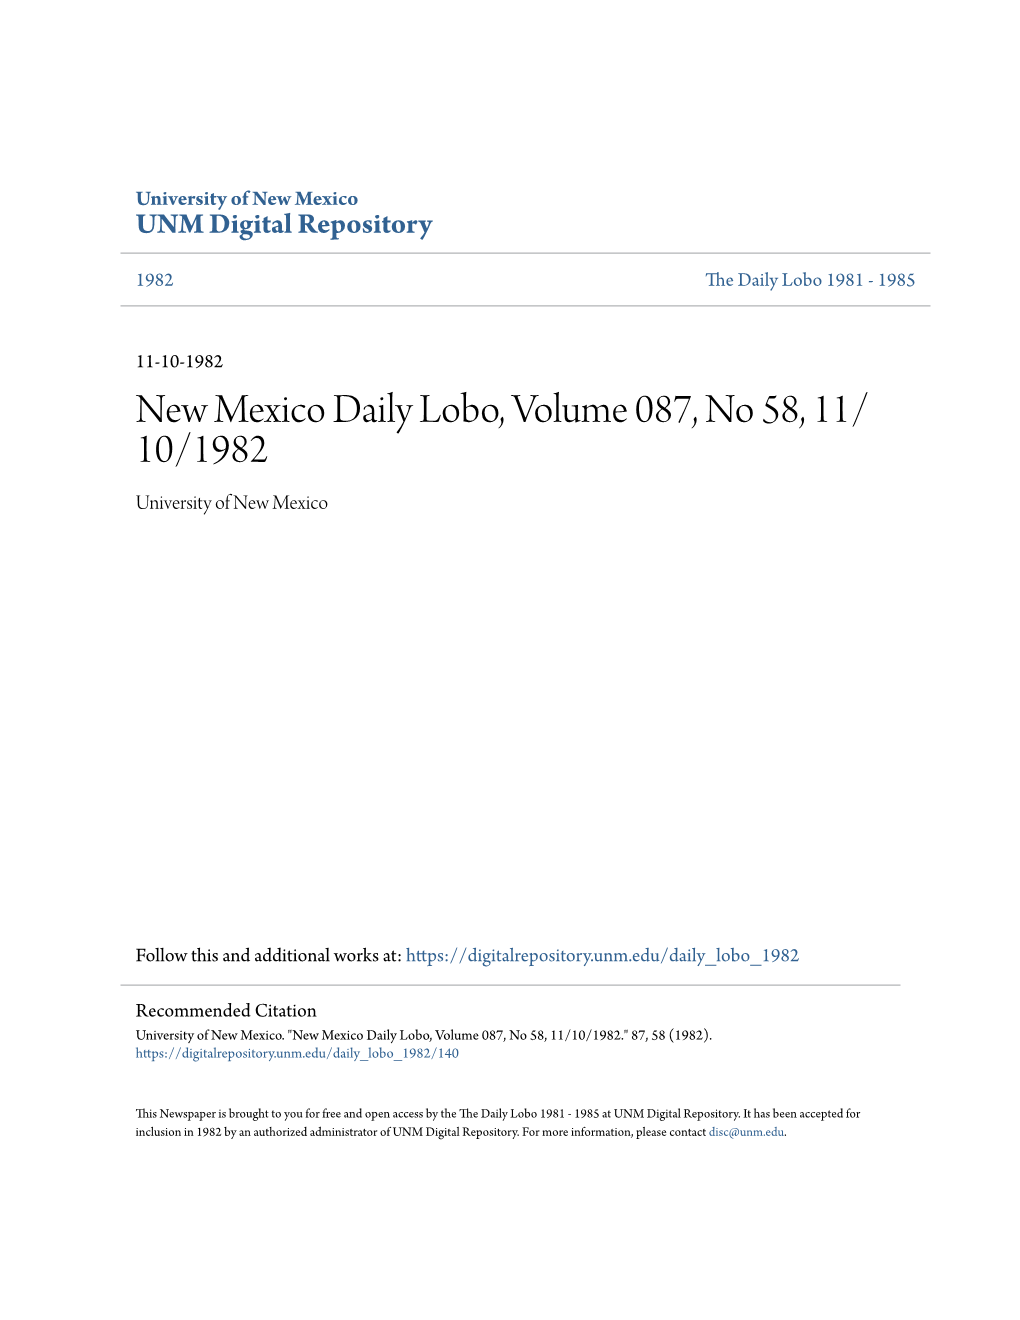 New Mexico Daily Lobo, Volume 087, No 58, 11/10/1982." 87, 58 (1982)